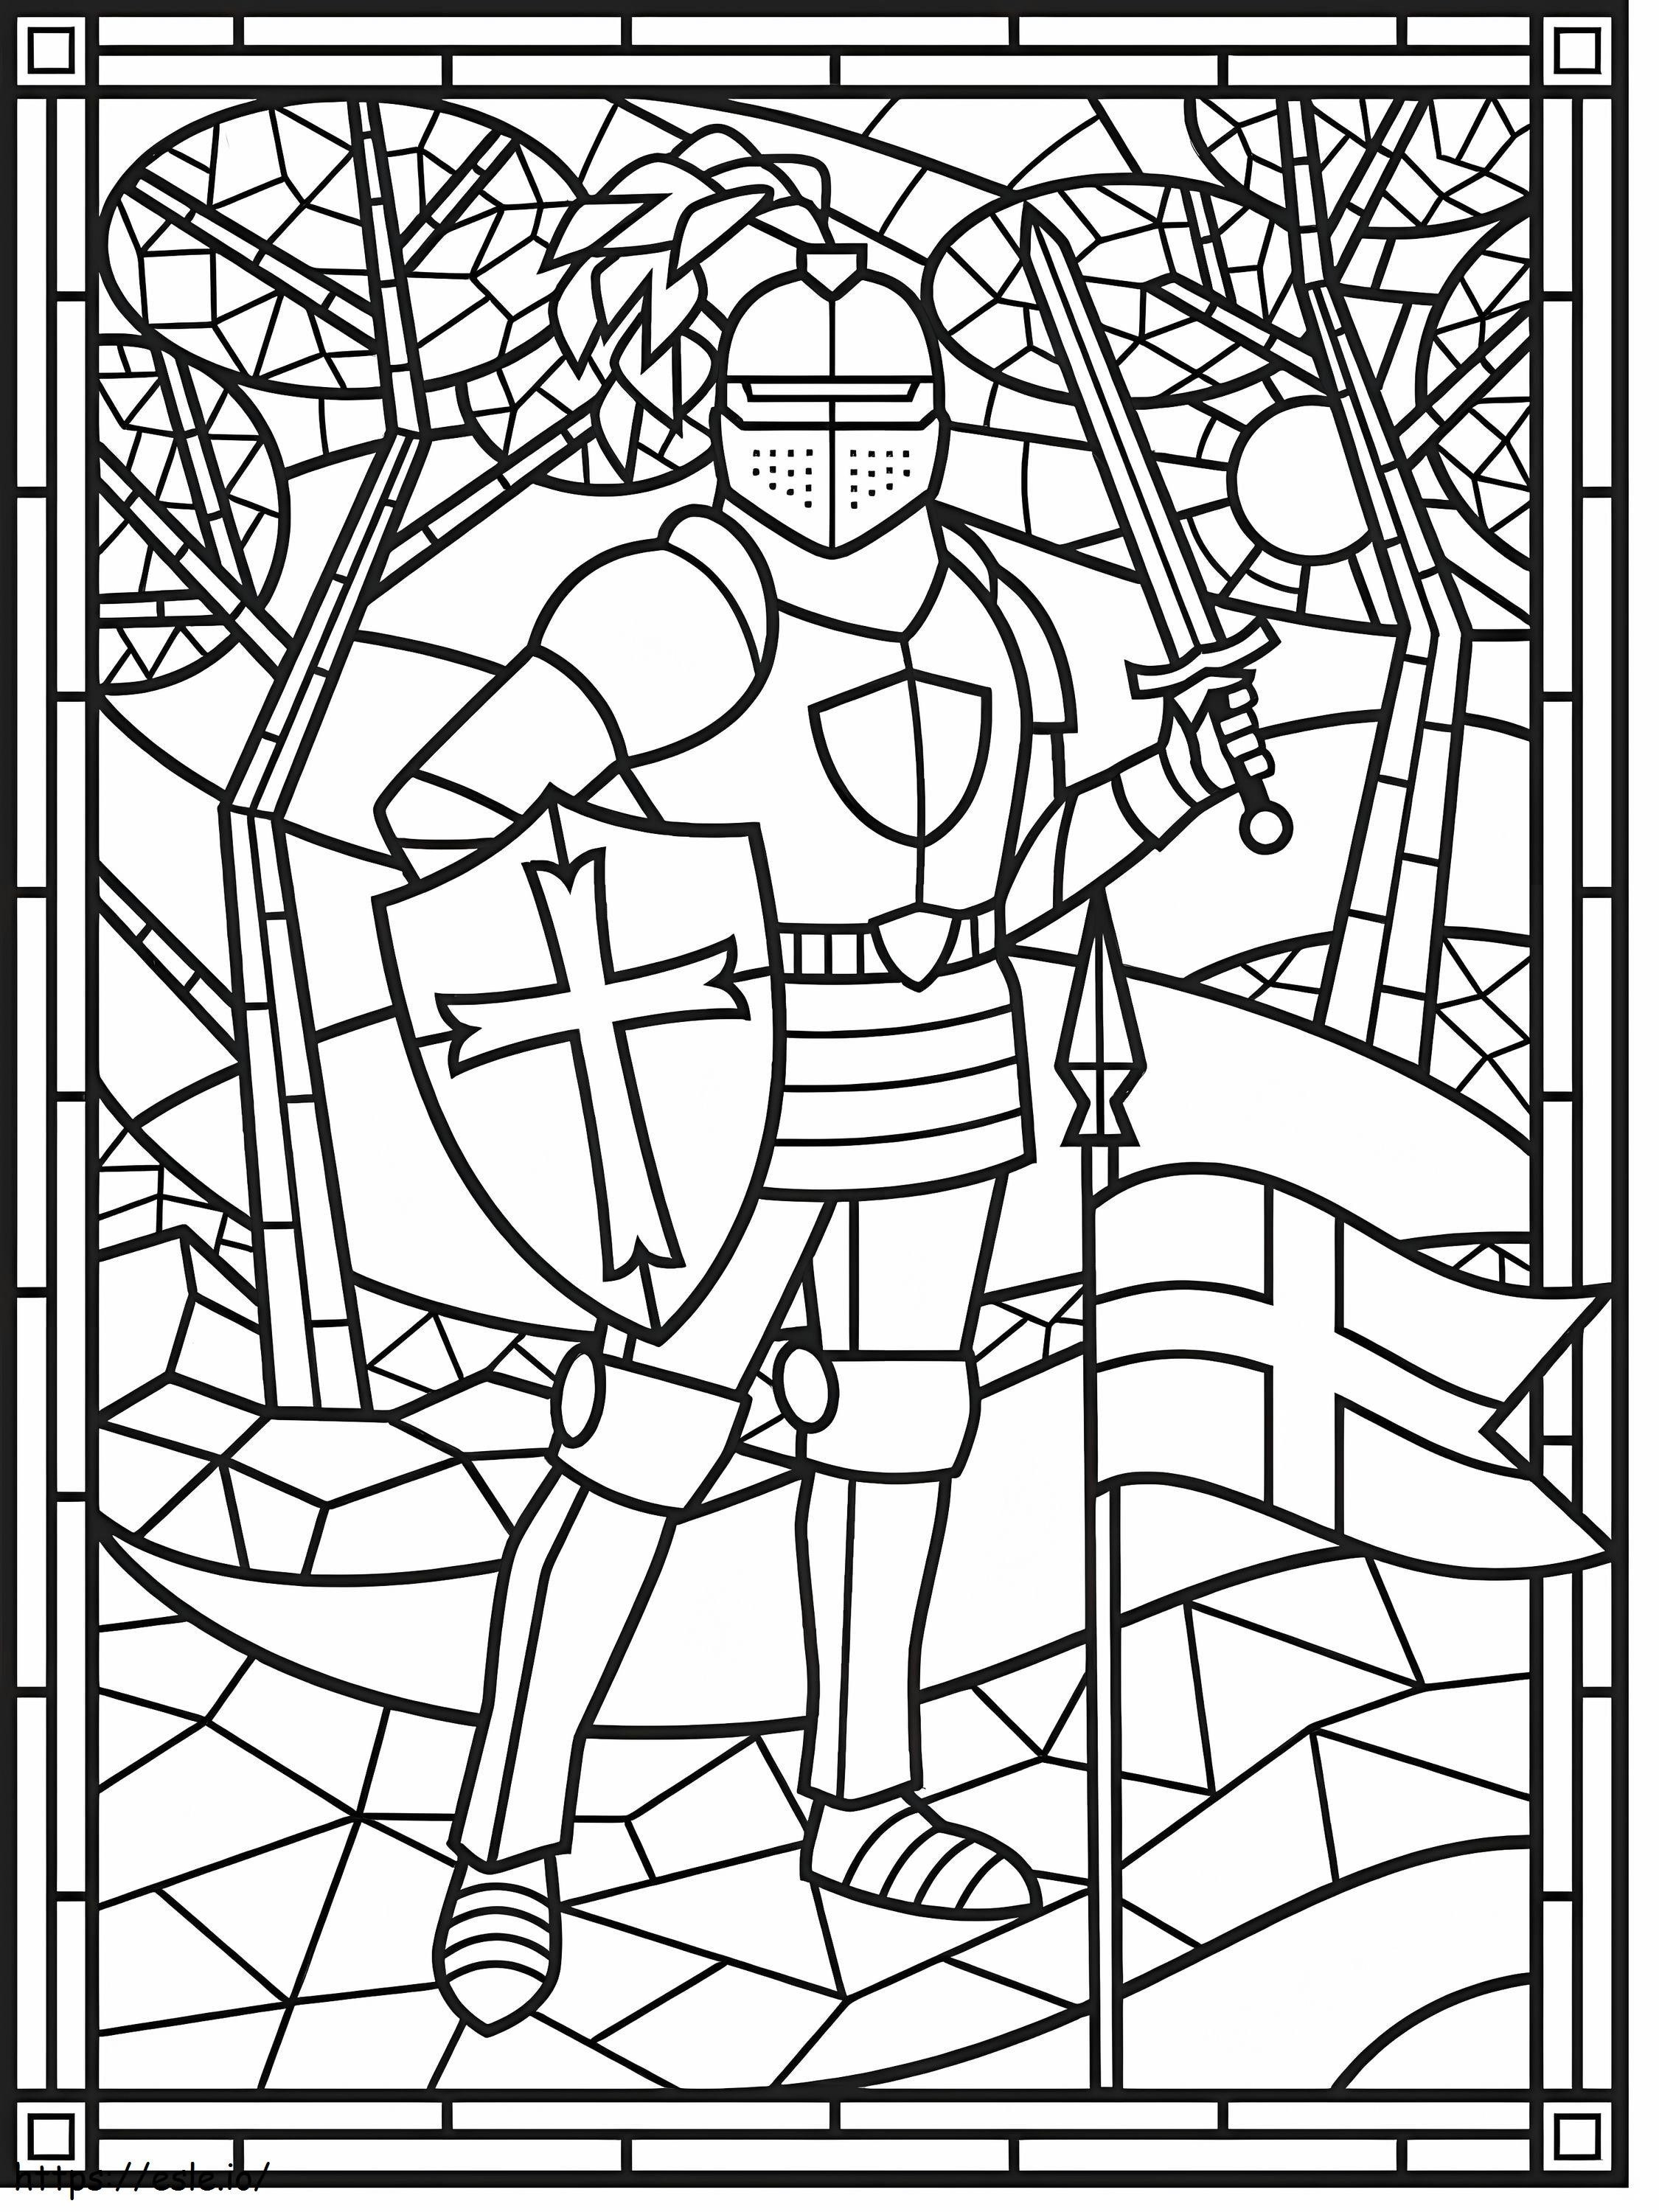 Glasmalerei des Ritters ausmalbilder